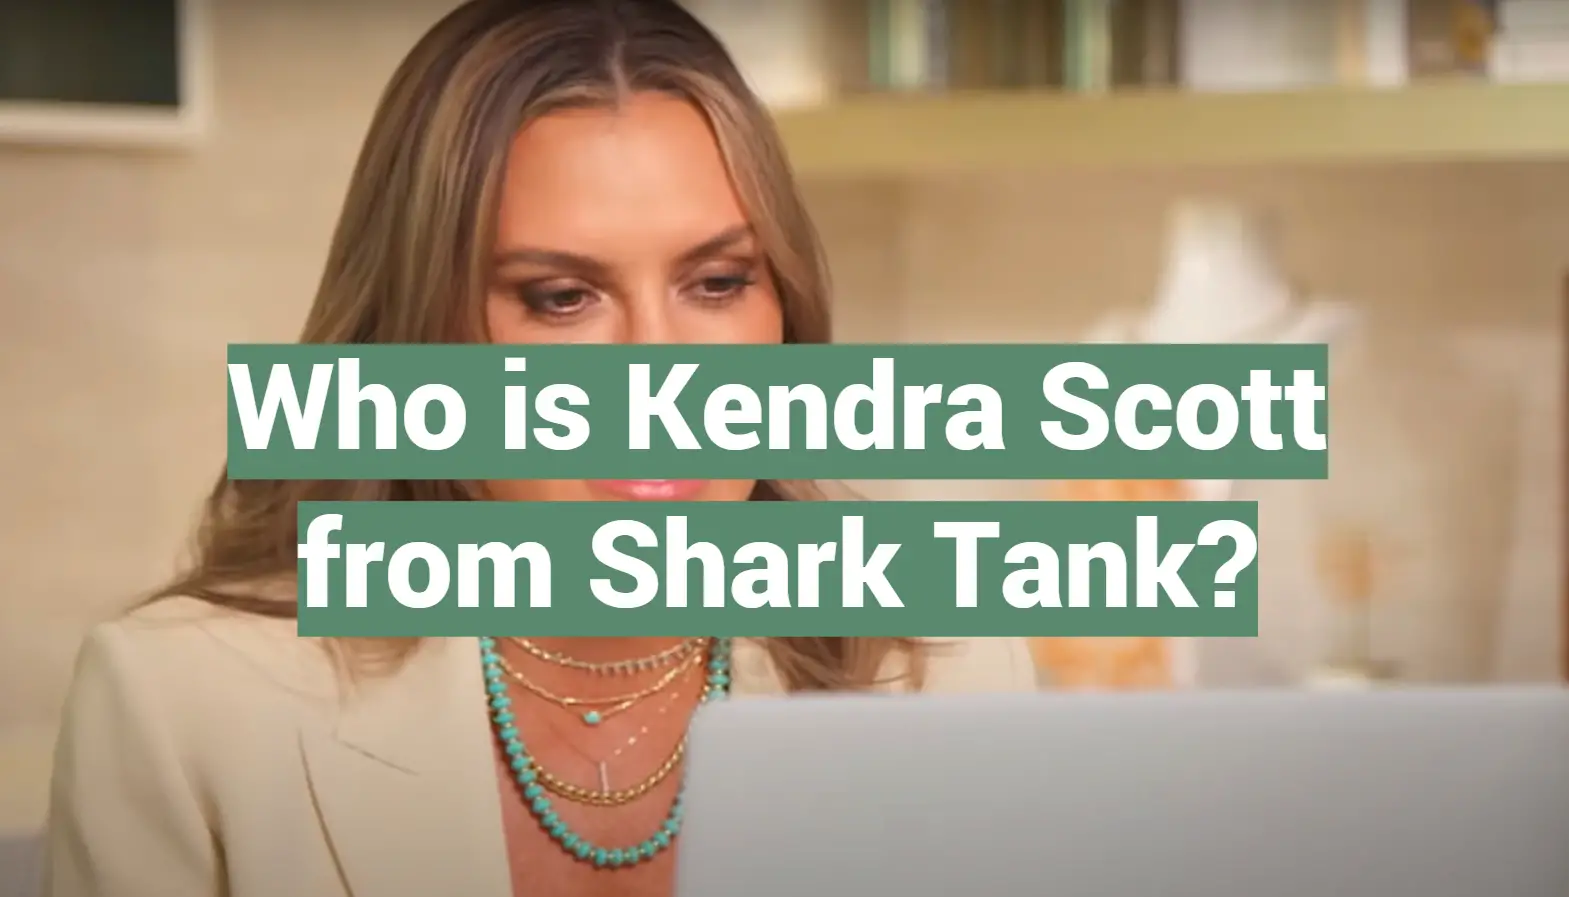 Who is Kendra Scott from Shark Tank?